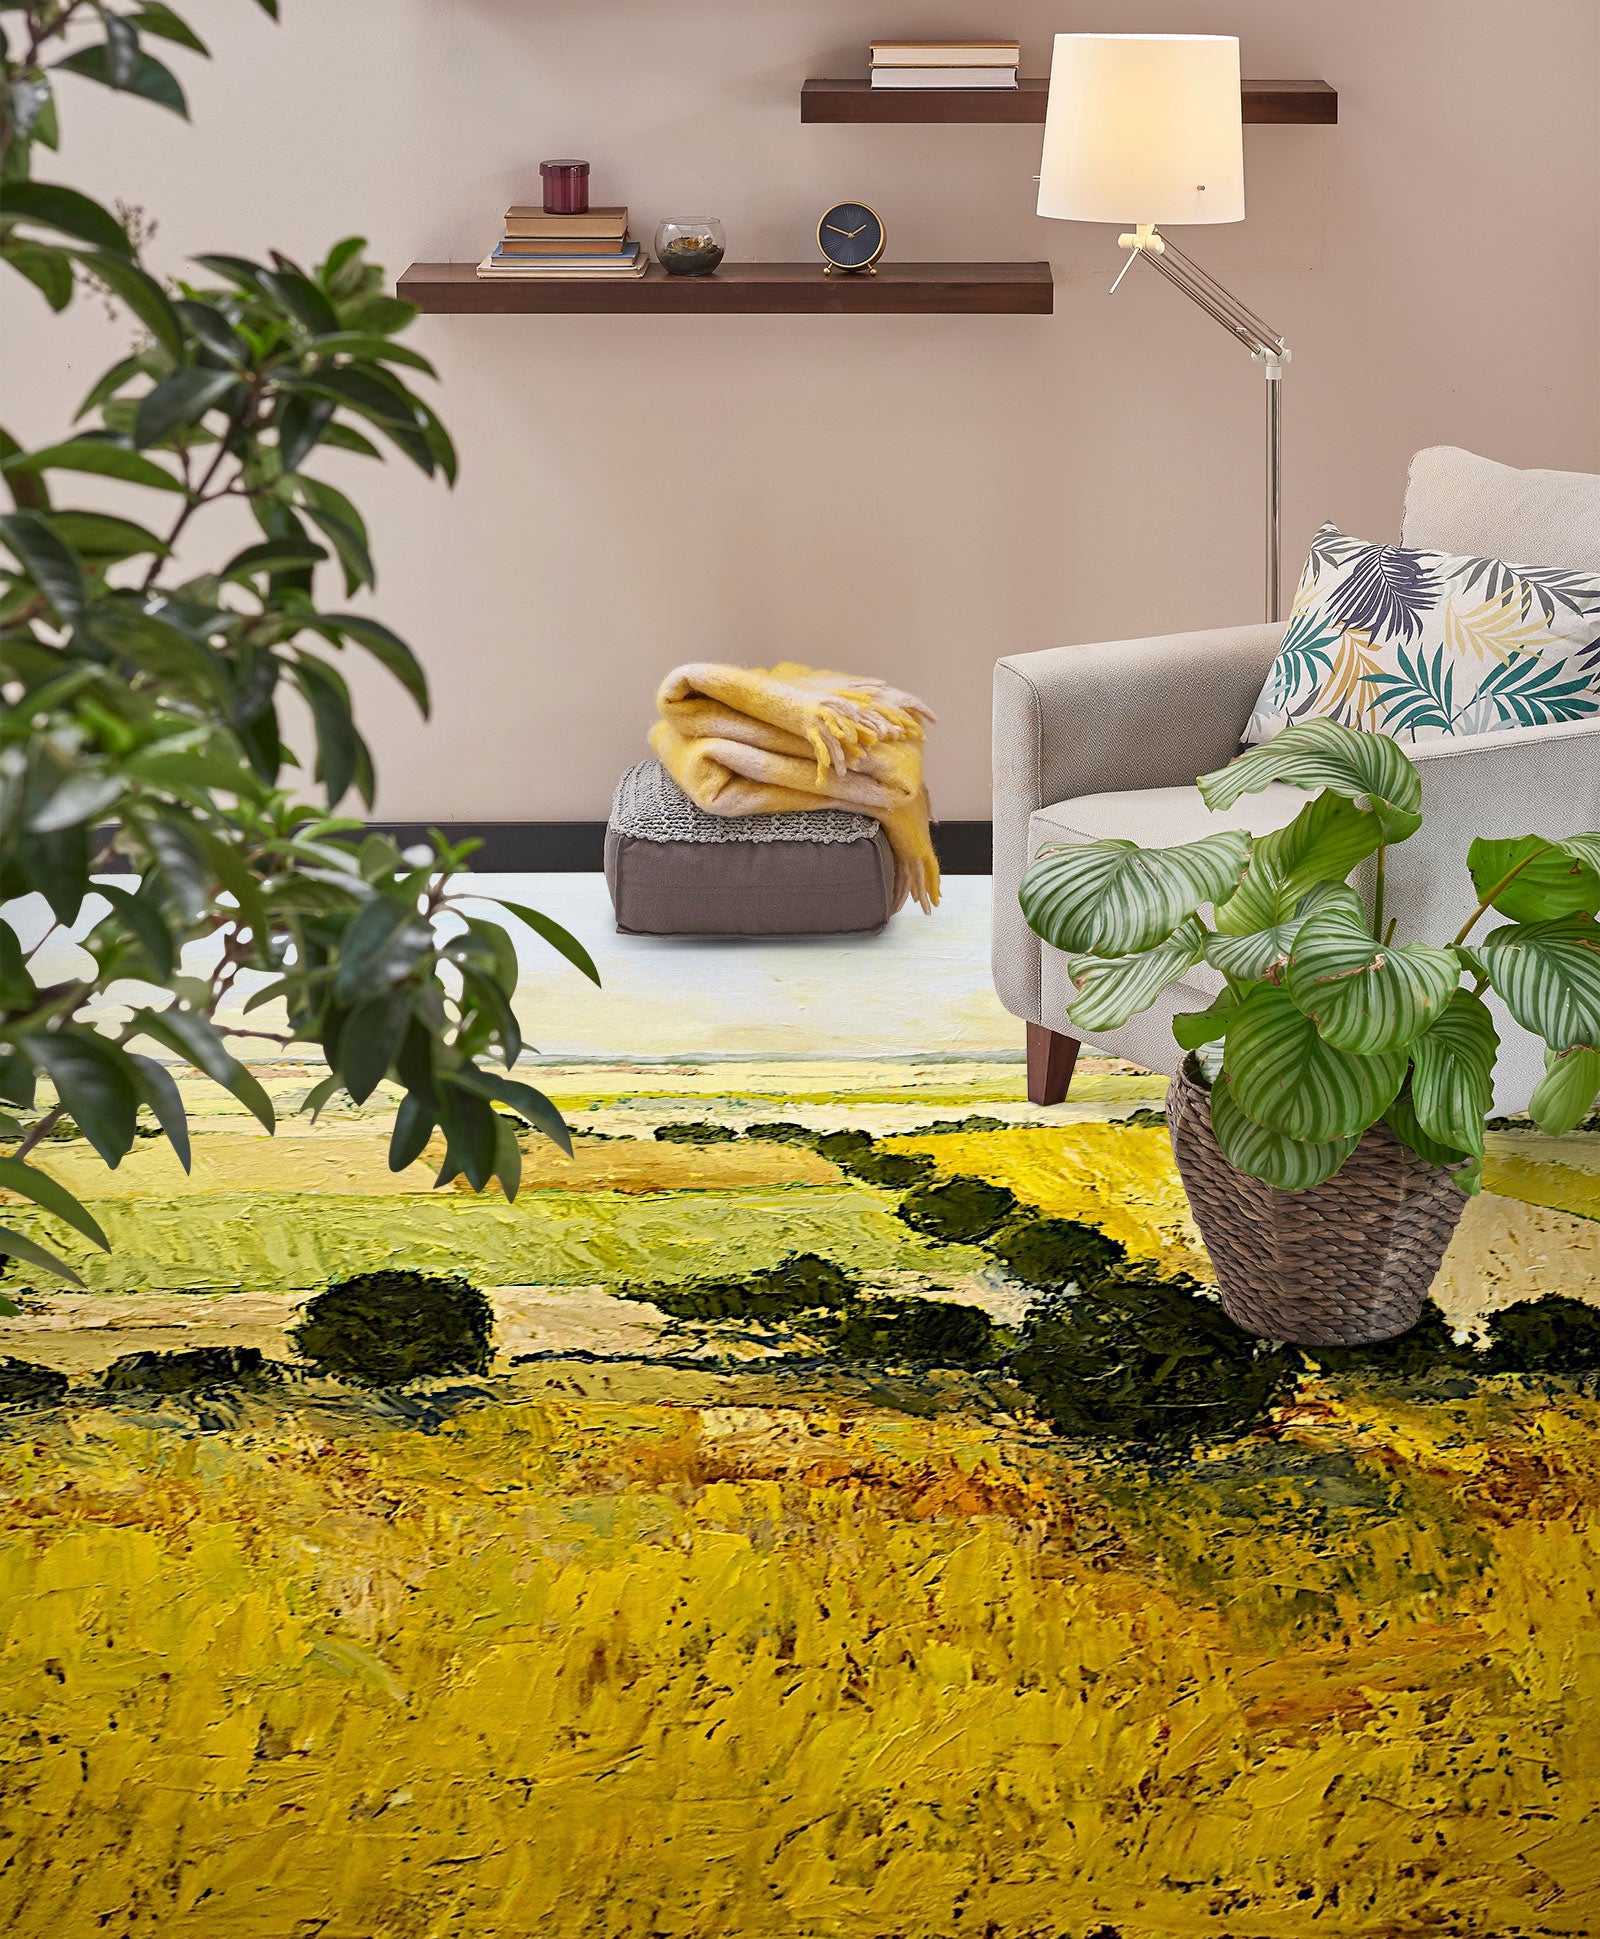 3D Golden Grass 9521 Allan P. Friedlander Floor Mural  Wallpaper Murals Self-Adhesive Removable Print Epoxy